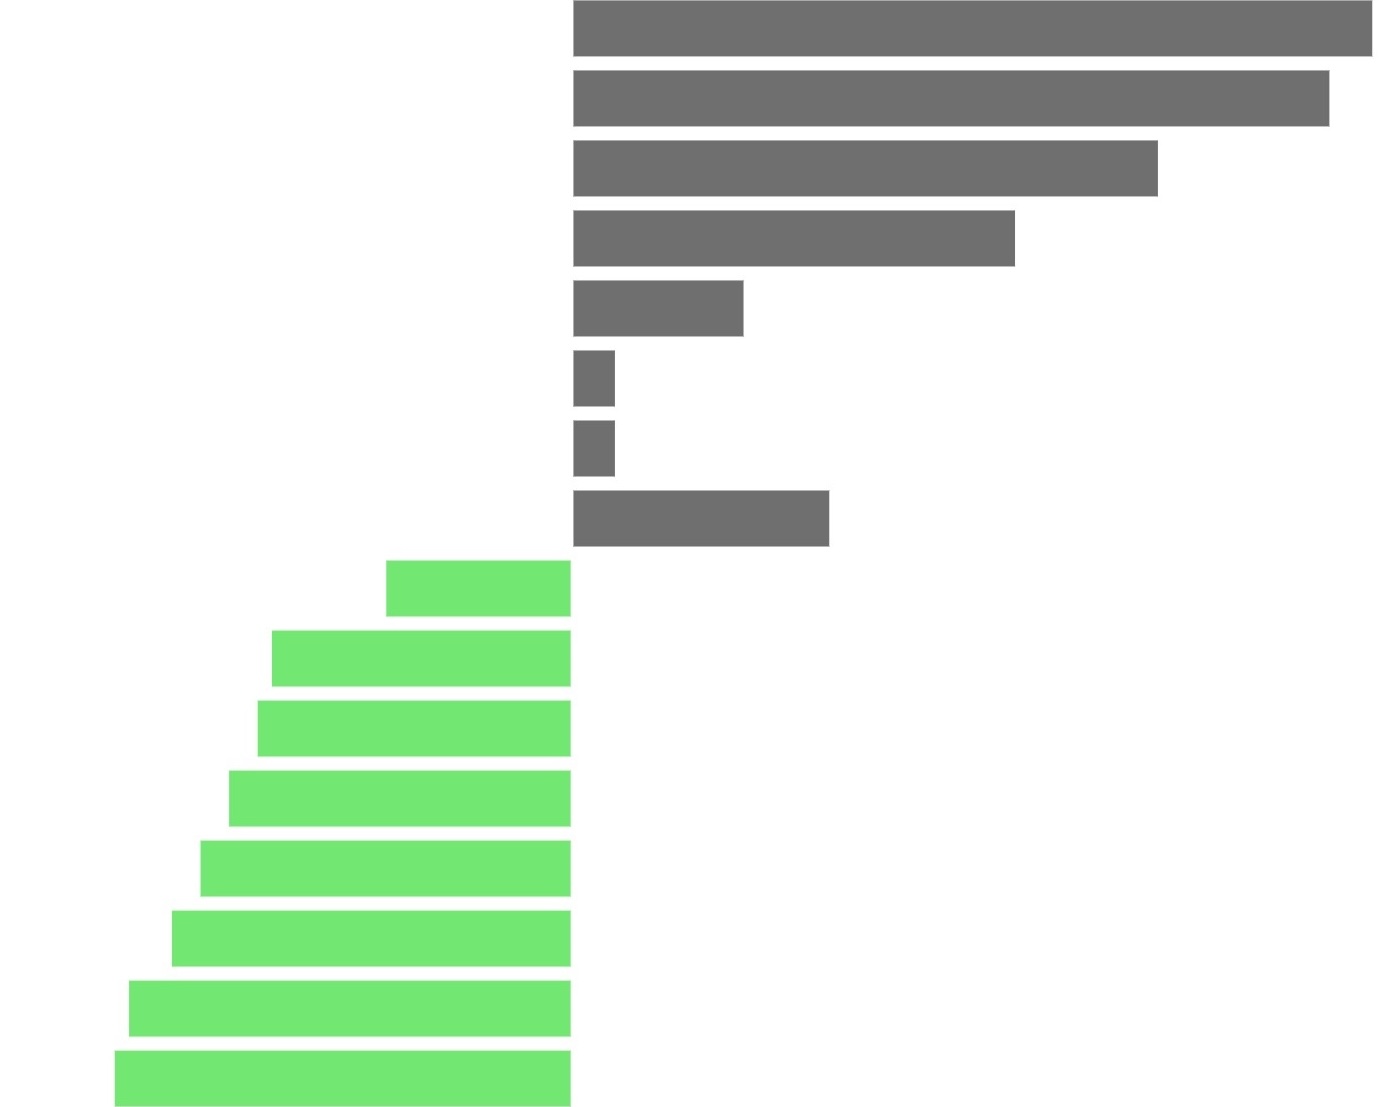 Horizontal bar chart, bars in grey and green.